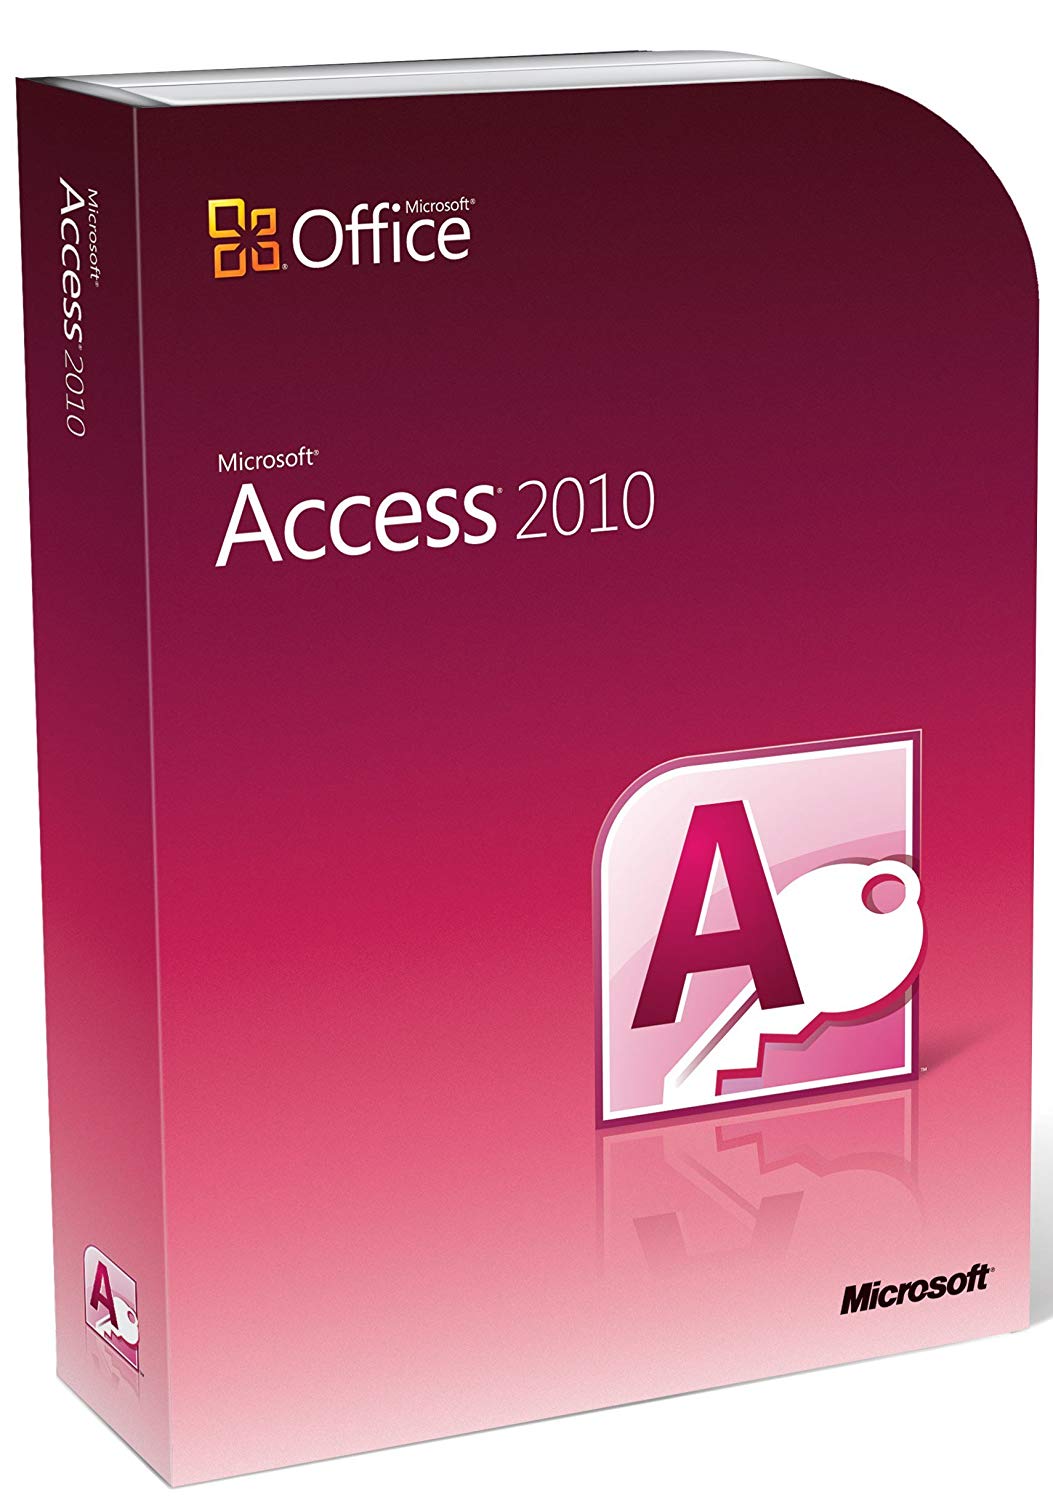 Microsoft Access 2010 | Blitzhandel24 - Compre software barato en la